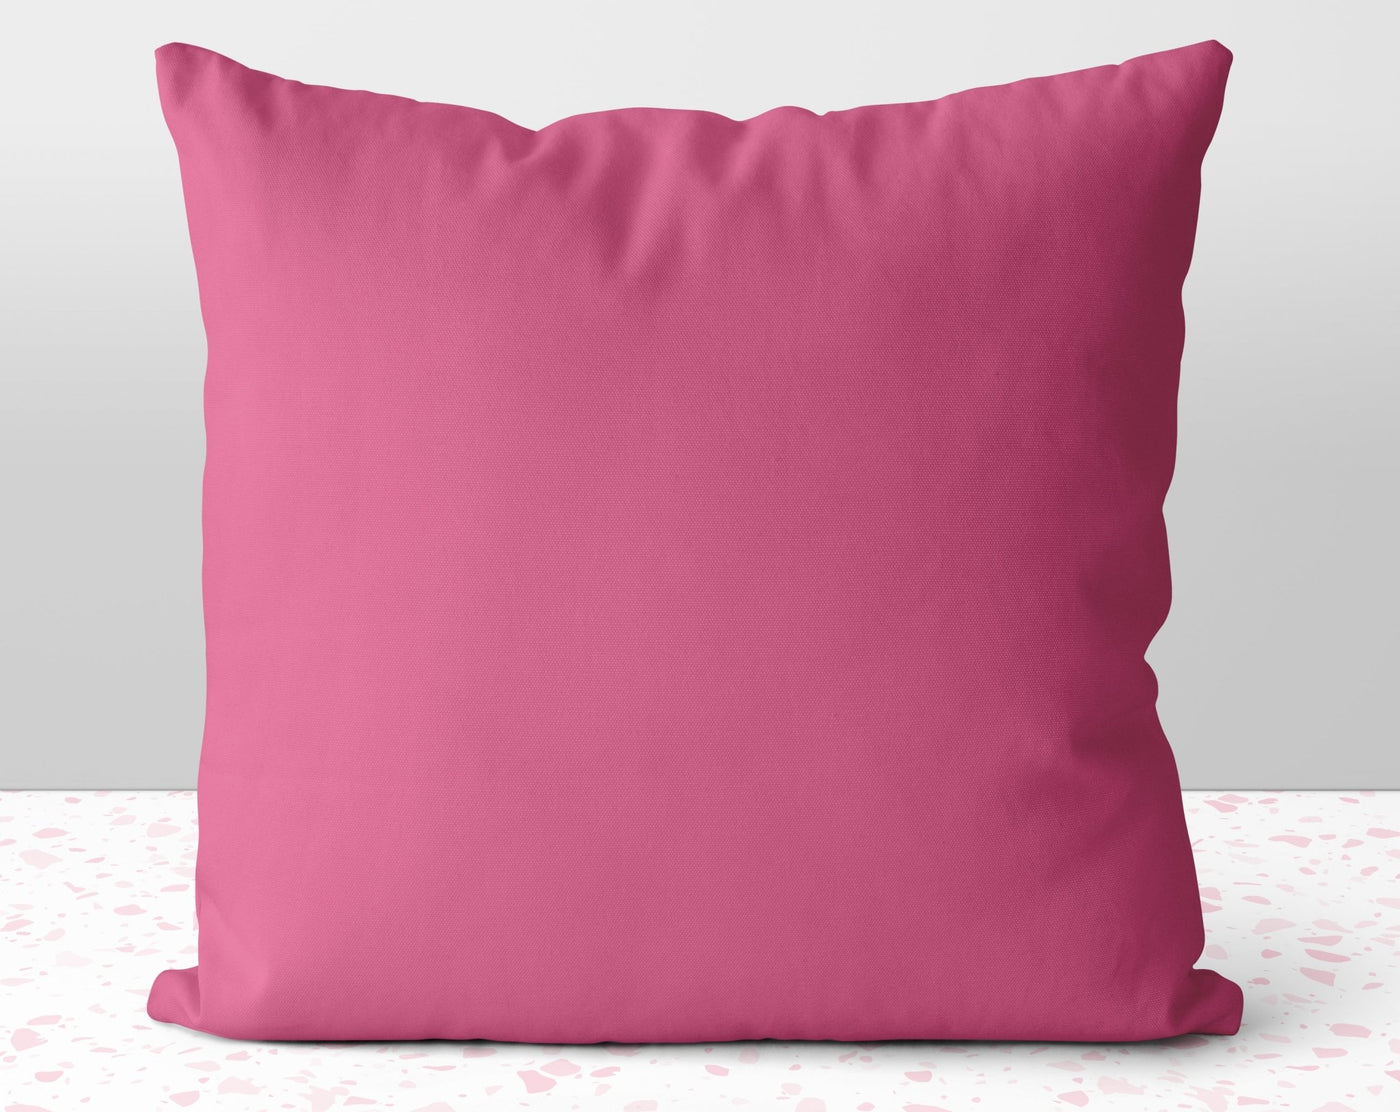 The Pink Flamingo Pillow Throw Cover with Insert - Cush Potato Pillows